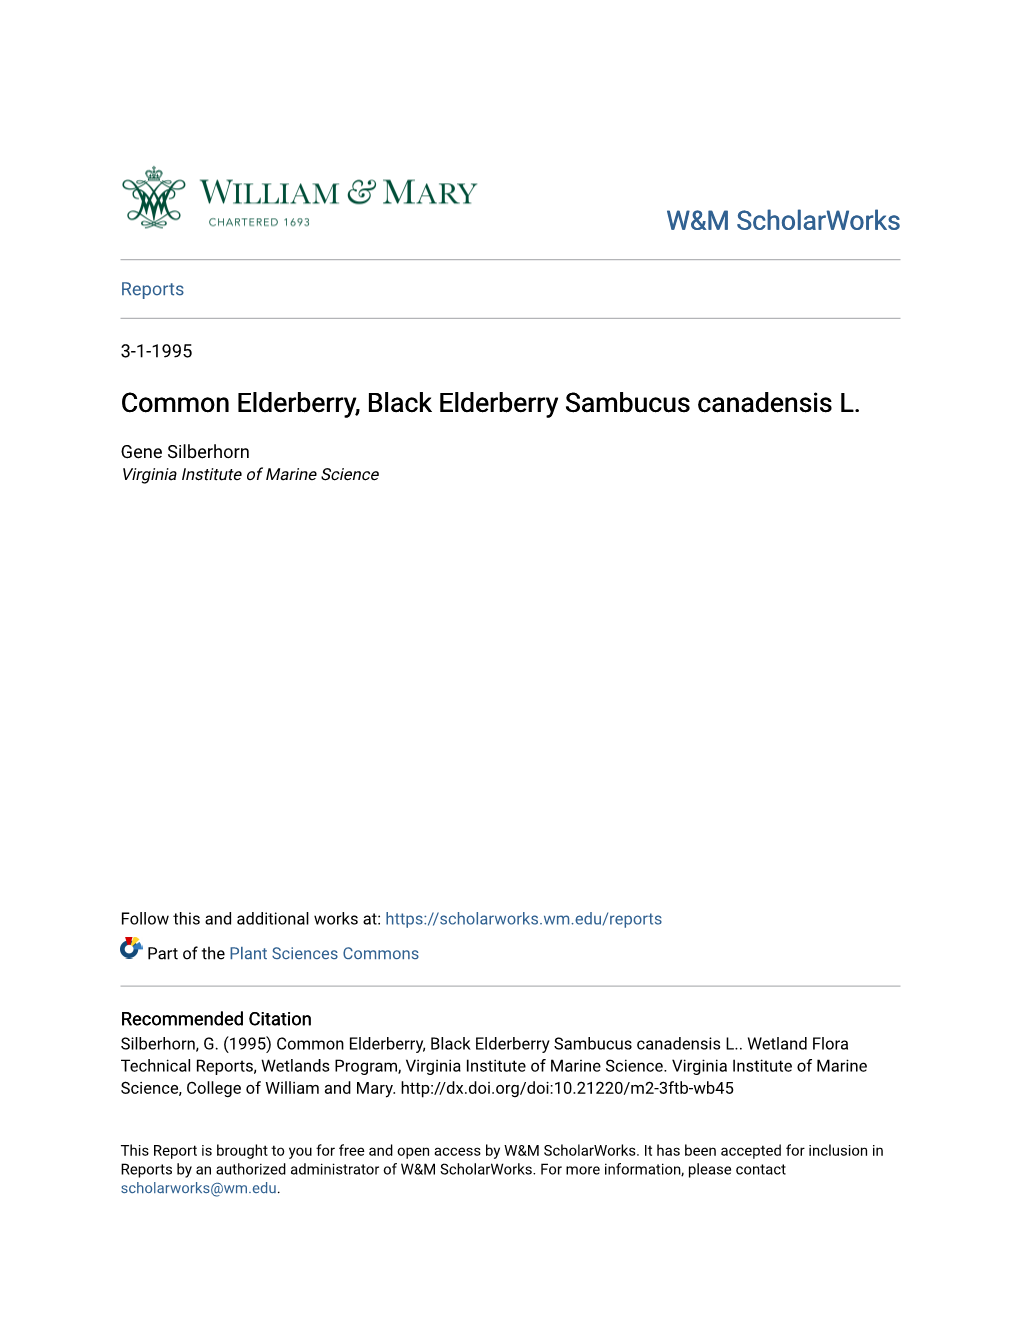 Common Elderberry, Black Elderberry Sambucus Canadensis L